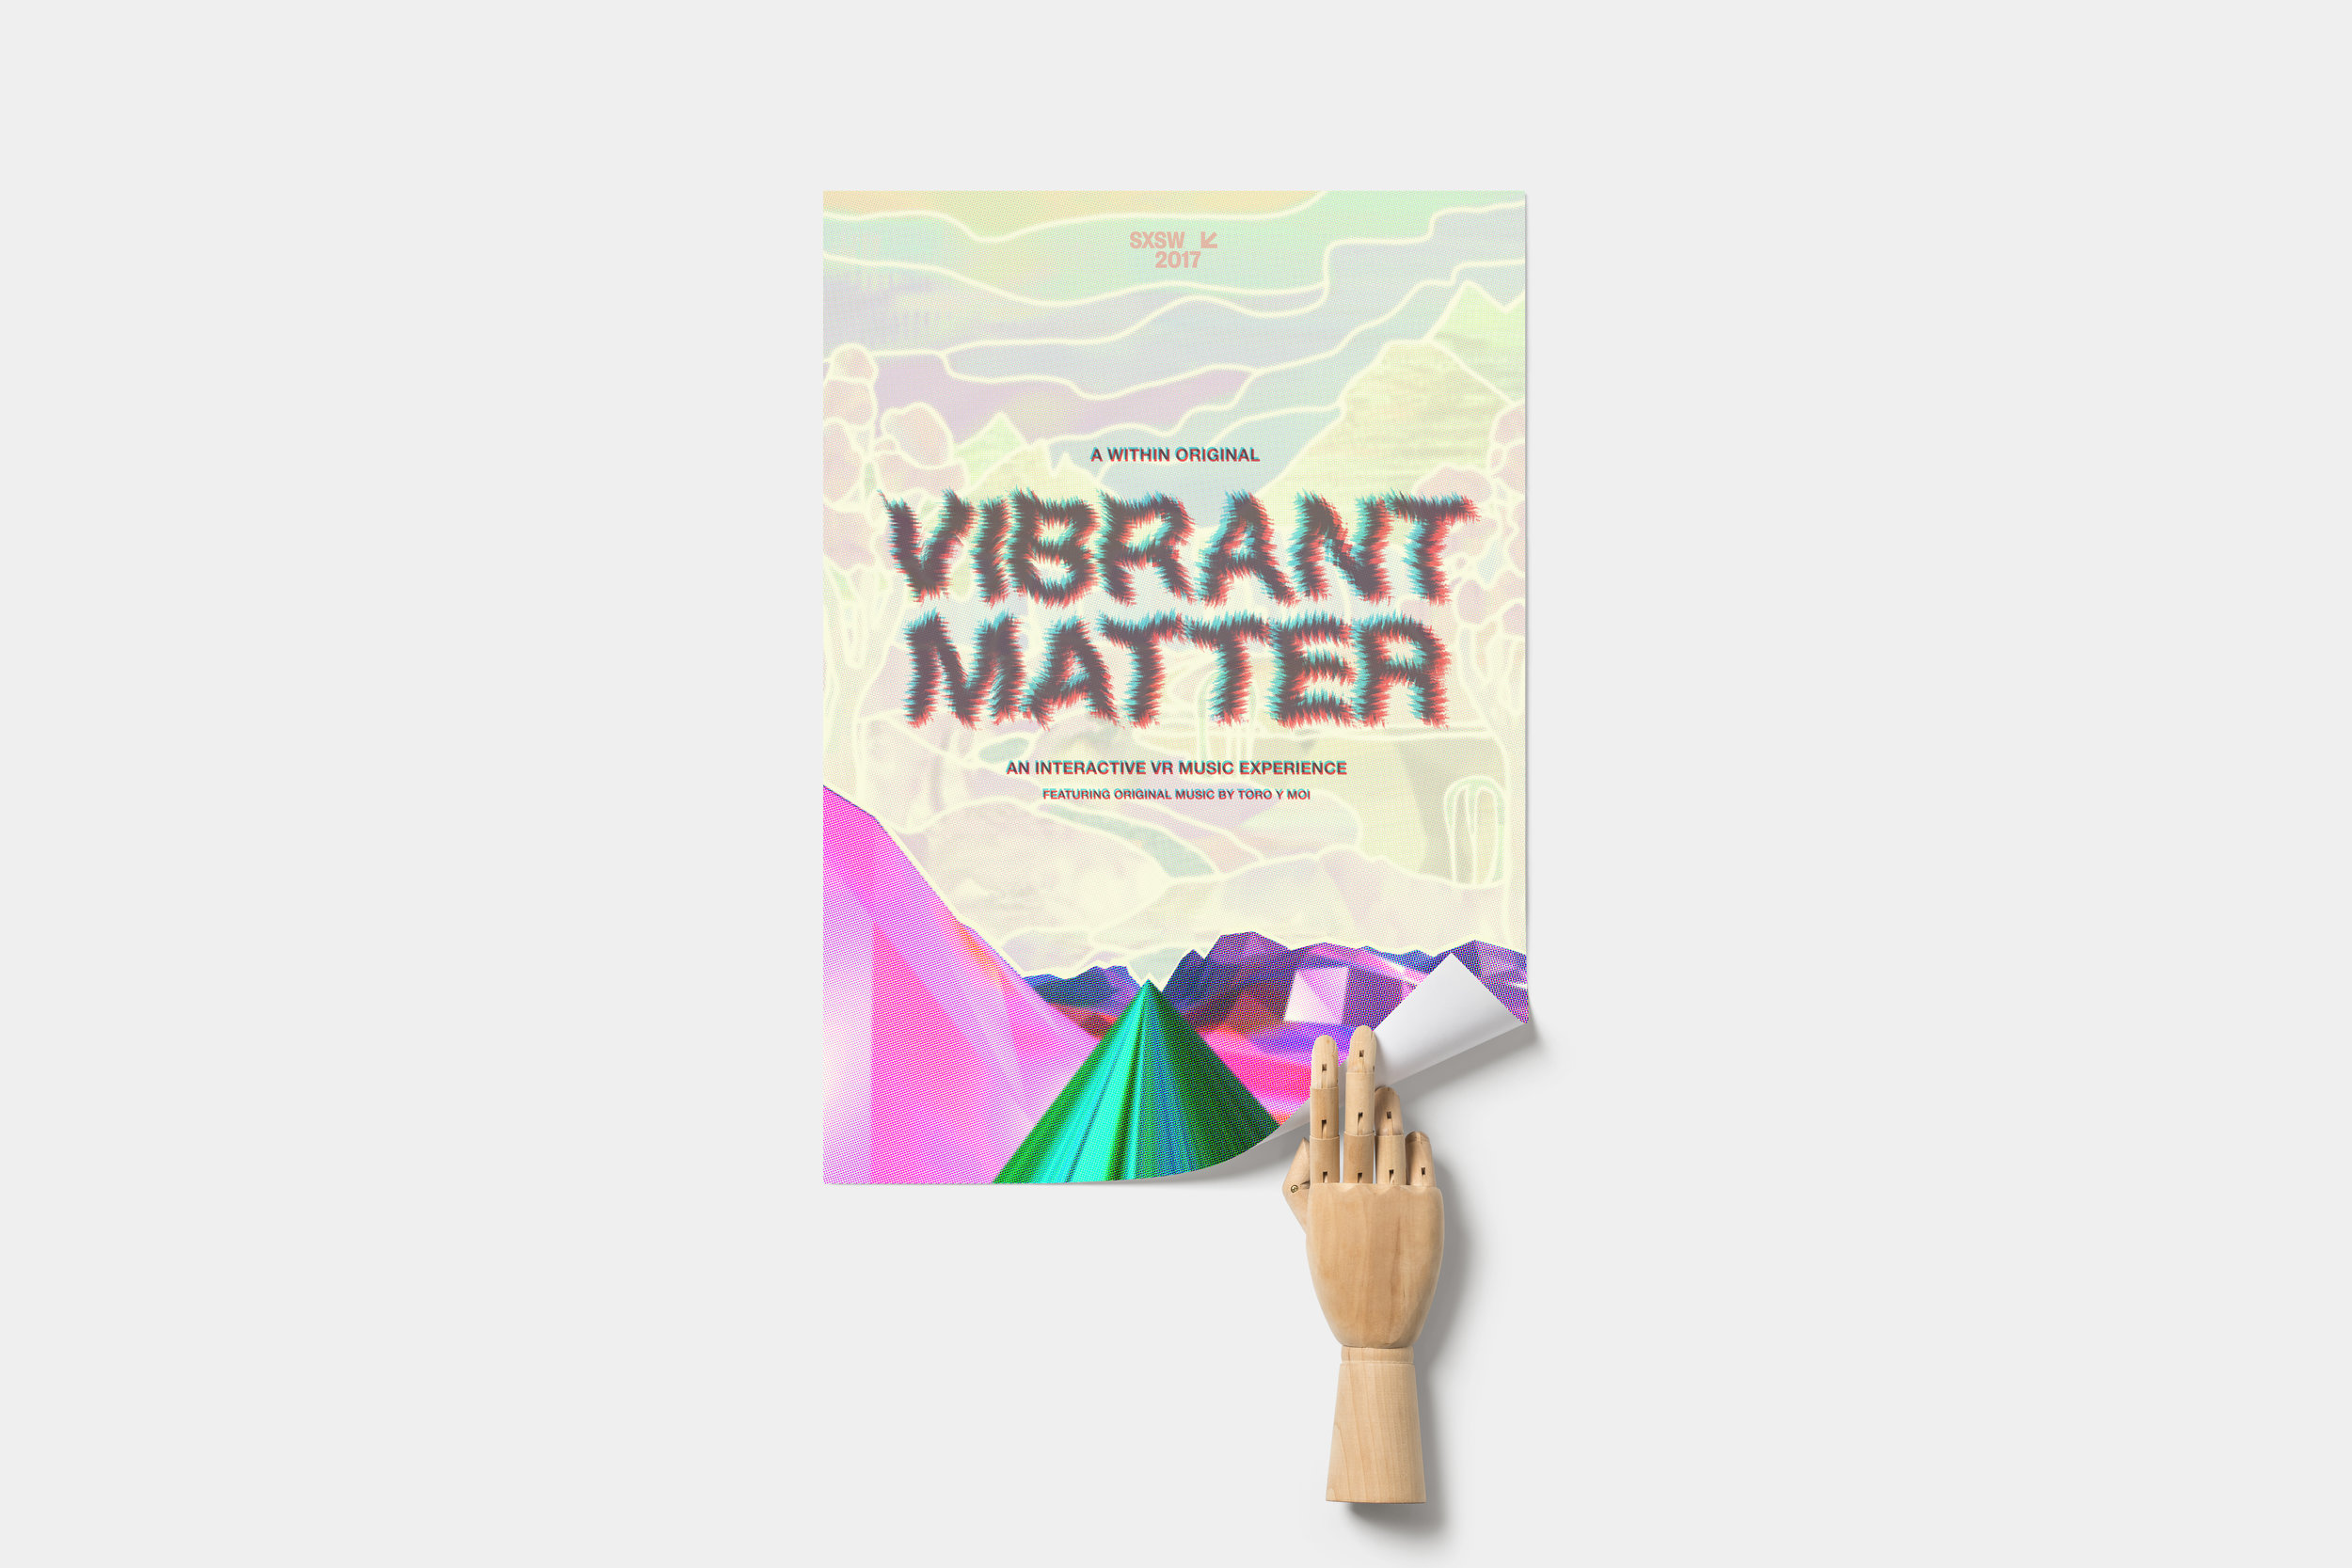   'Vibrant Matter' SXSW premiere poster  